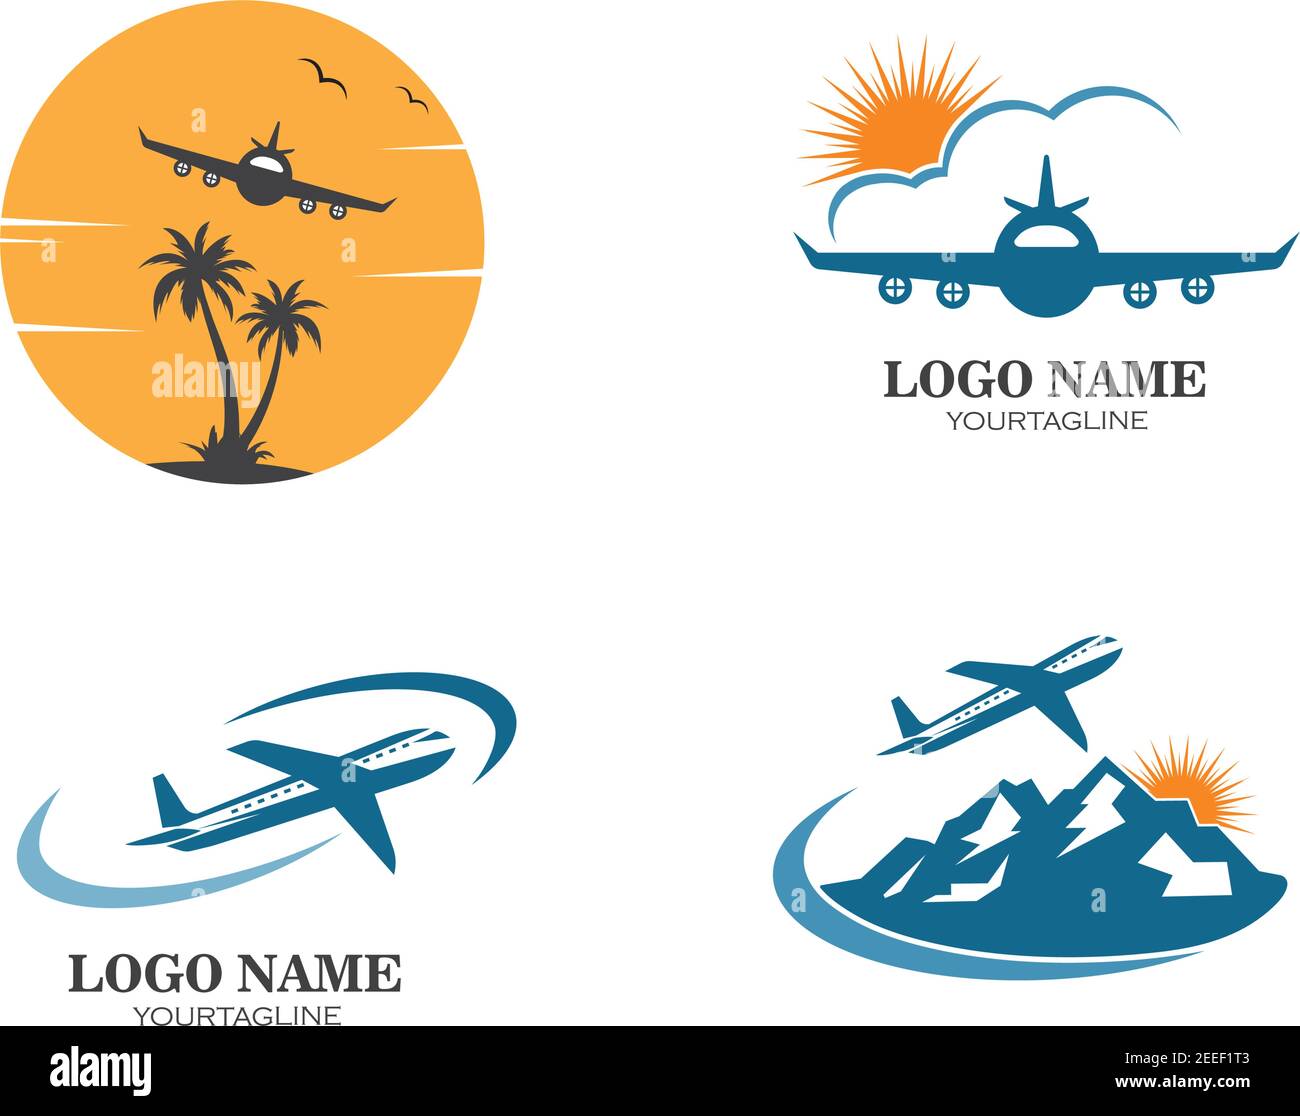 Free Travel Logo Maker - Online Airplane Logo Design